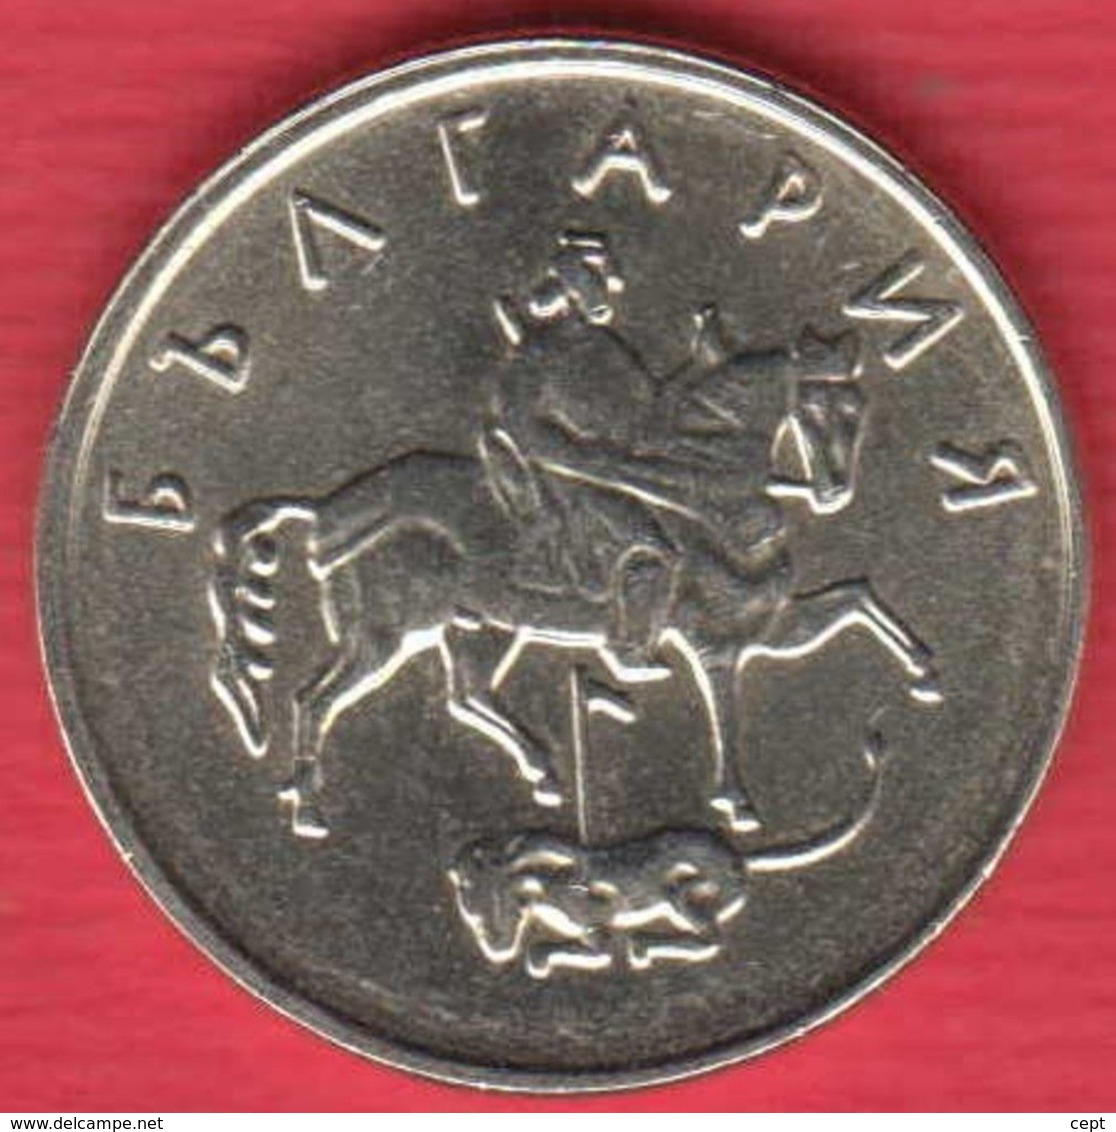 0,10 Lv - Bulgaria 1999 Year - Coin - Bulgaria